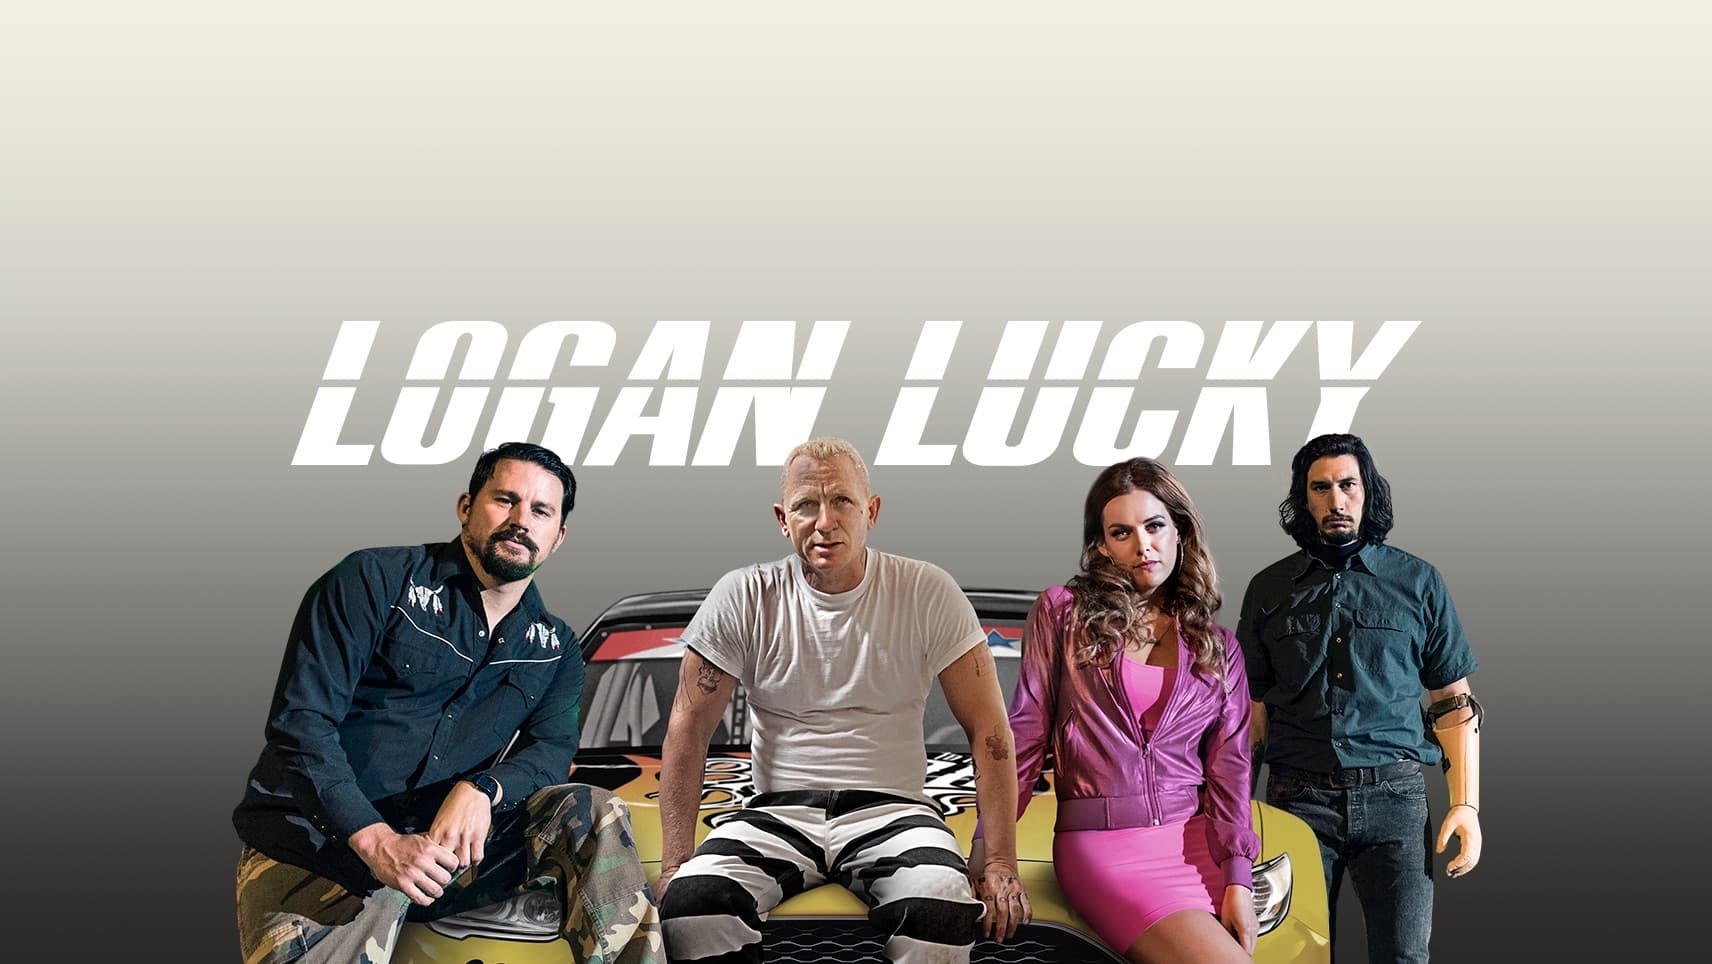 Logan Lucky: Miliónová lúpež (2017)